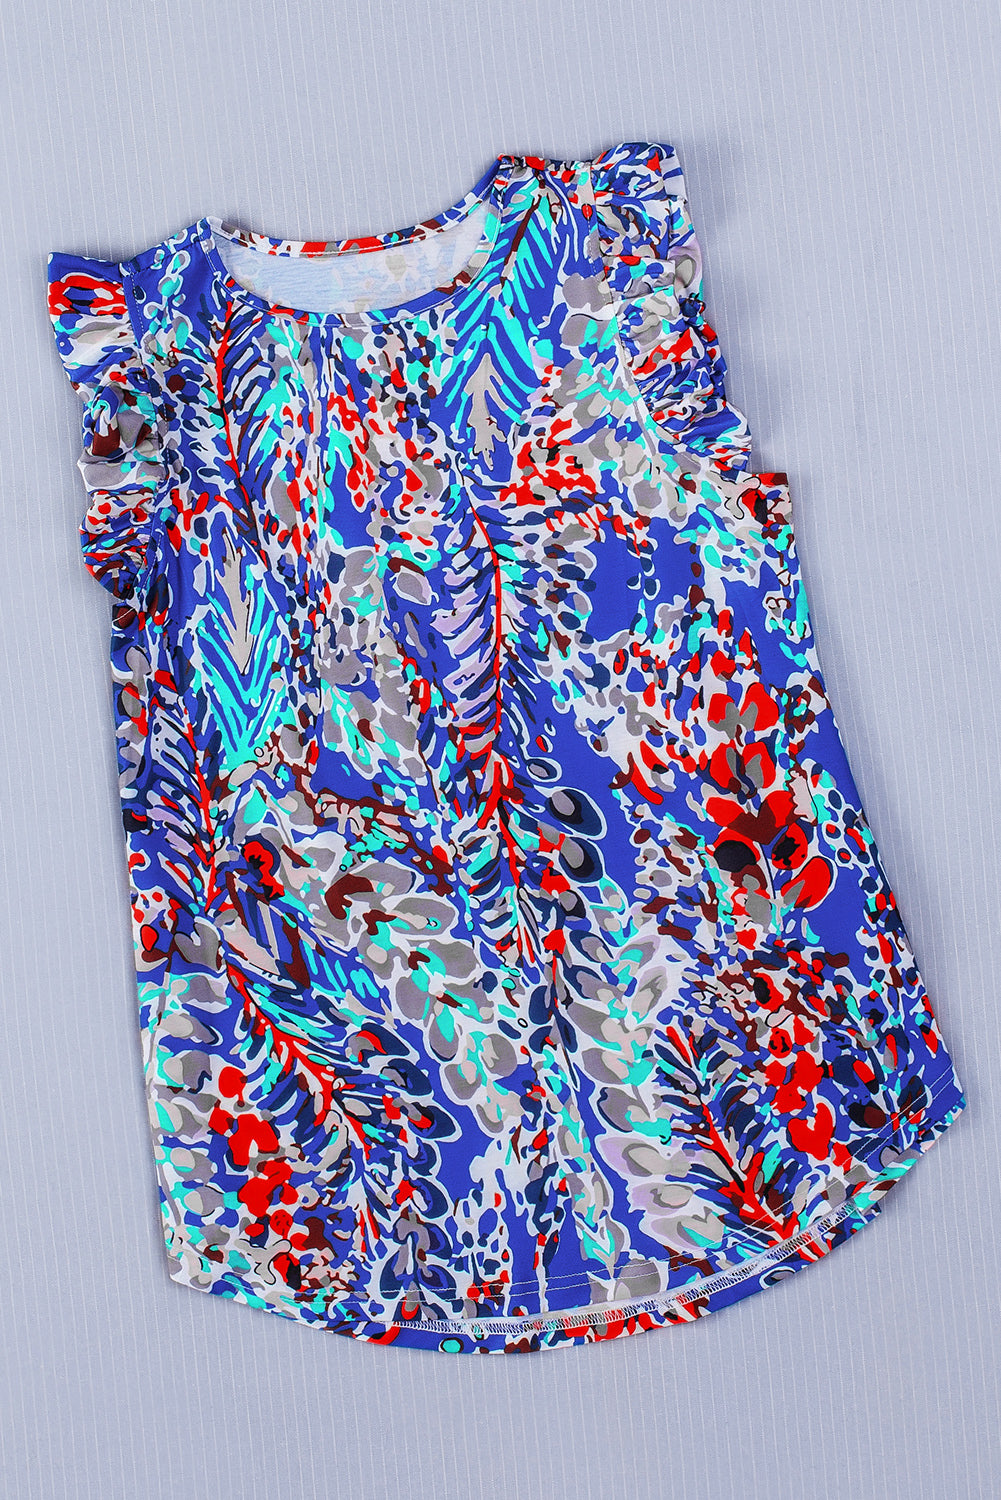 Women's Light Blue Abstract Print Color Block Babydoll Boho Sleeveless Shirt with Ruffle